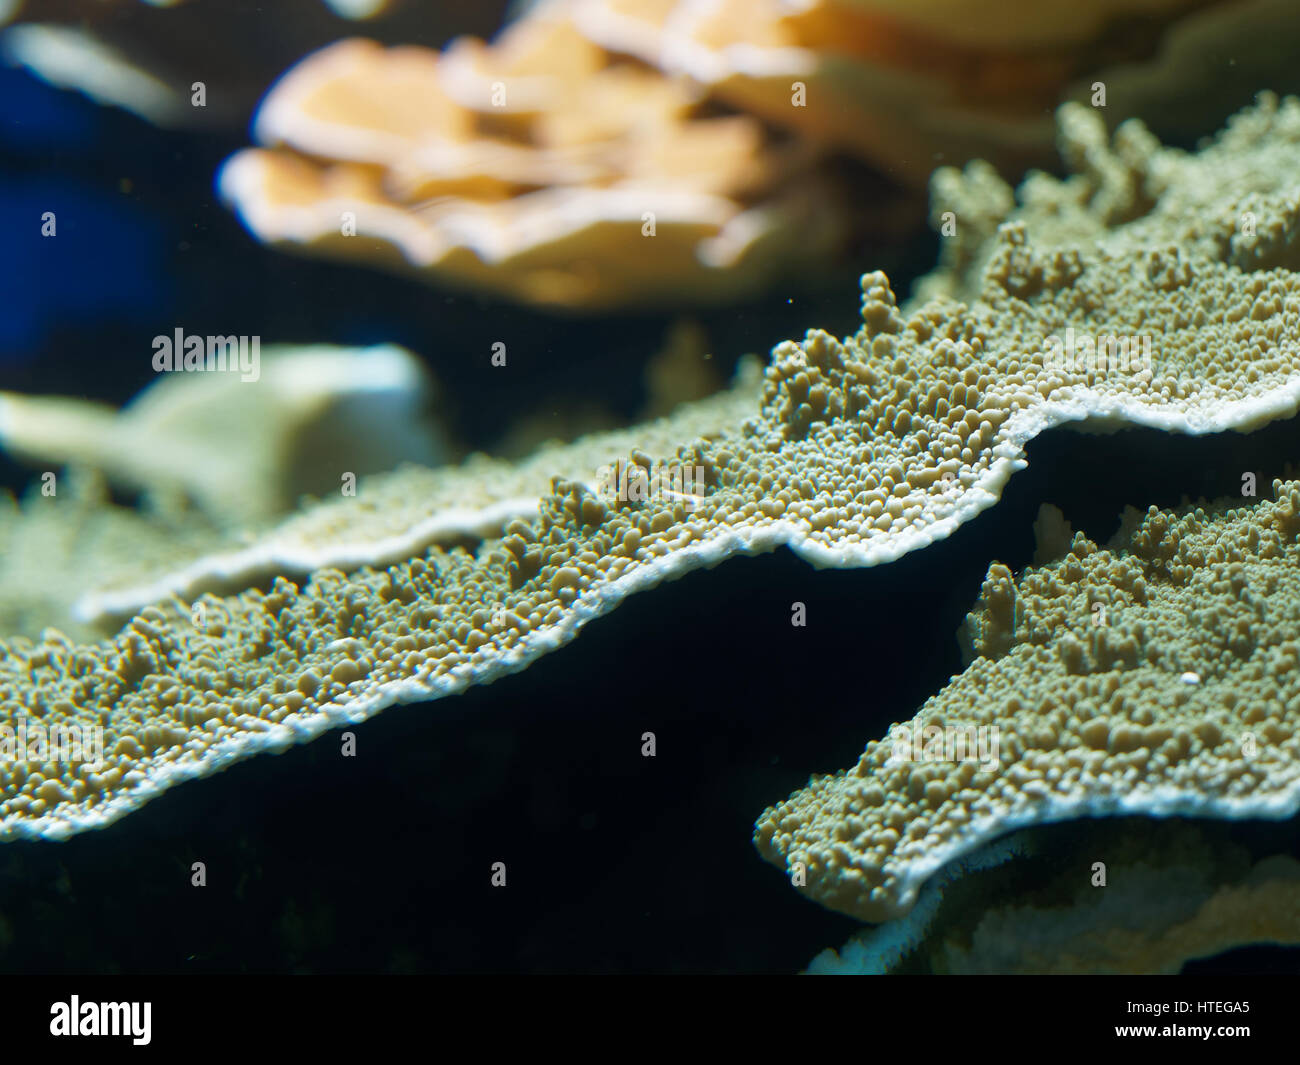 Velvet Corals, Montipora sp. Stock Photo